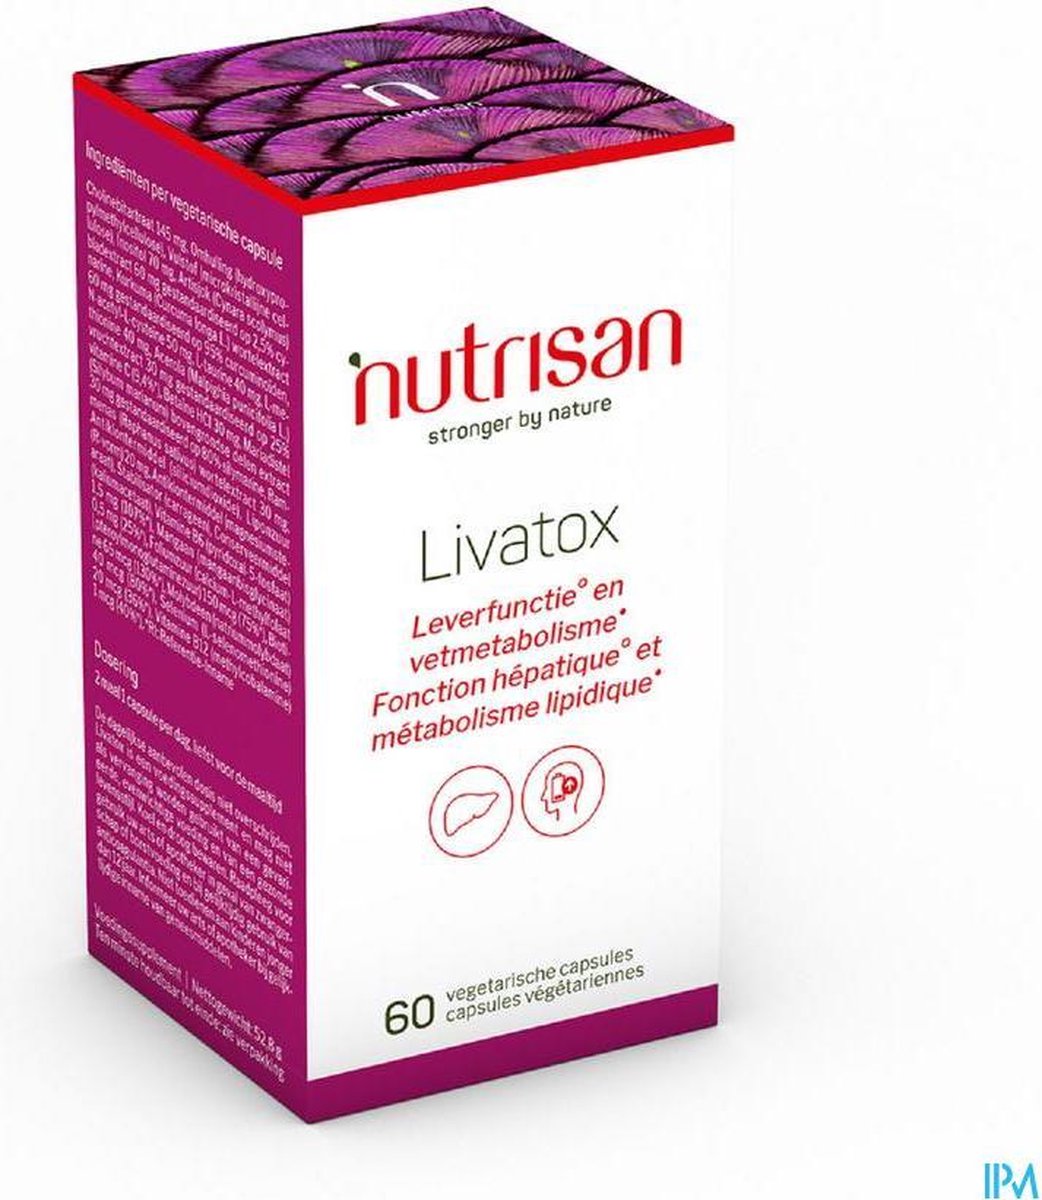 Nutrisan Livatox 60 vcaps